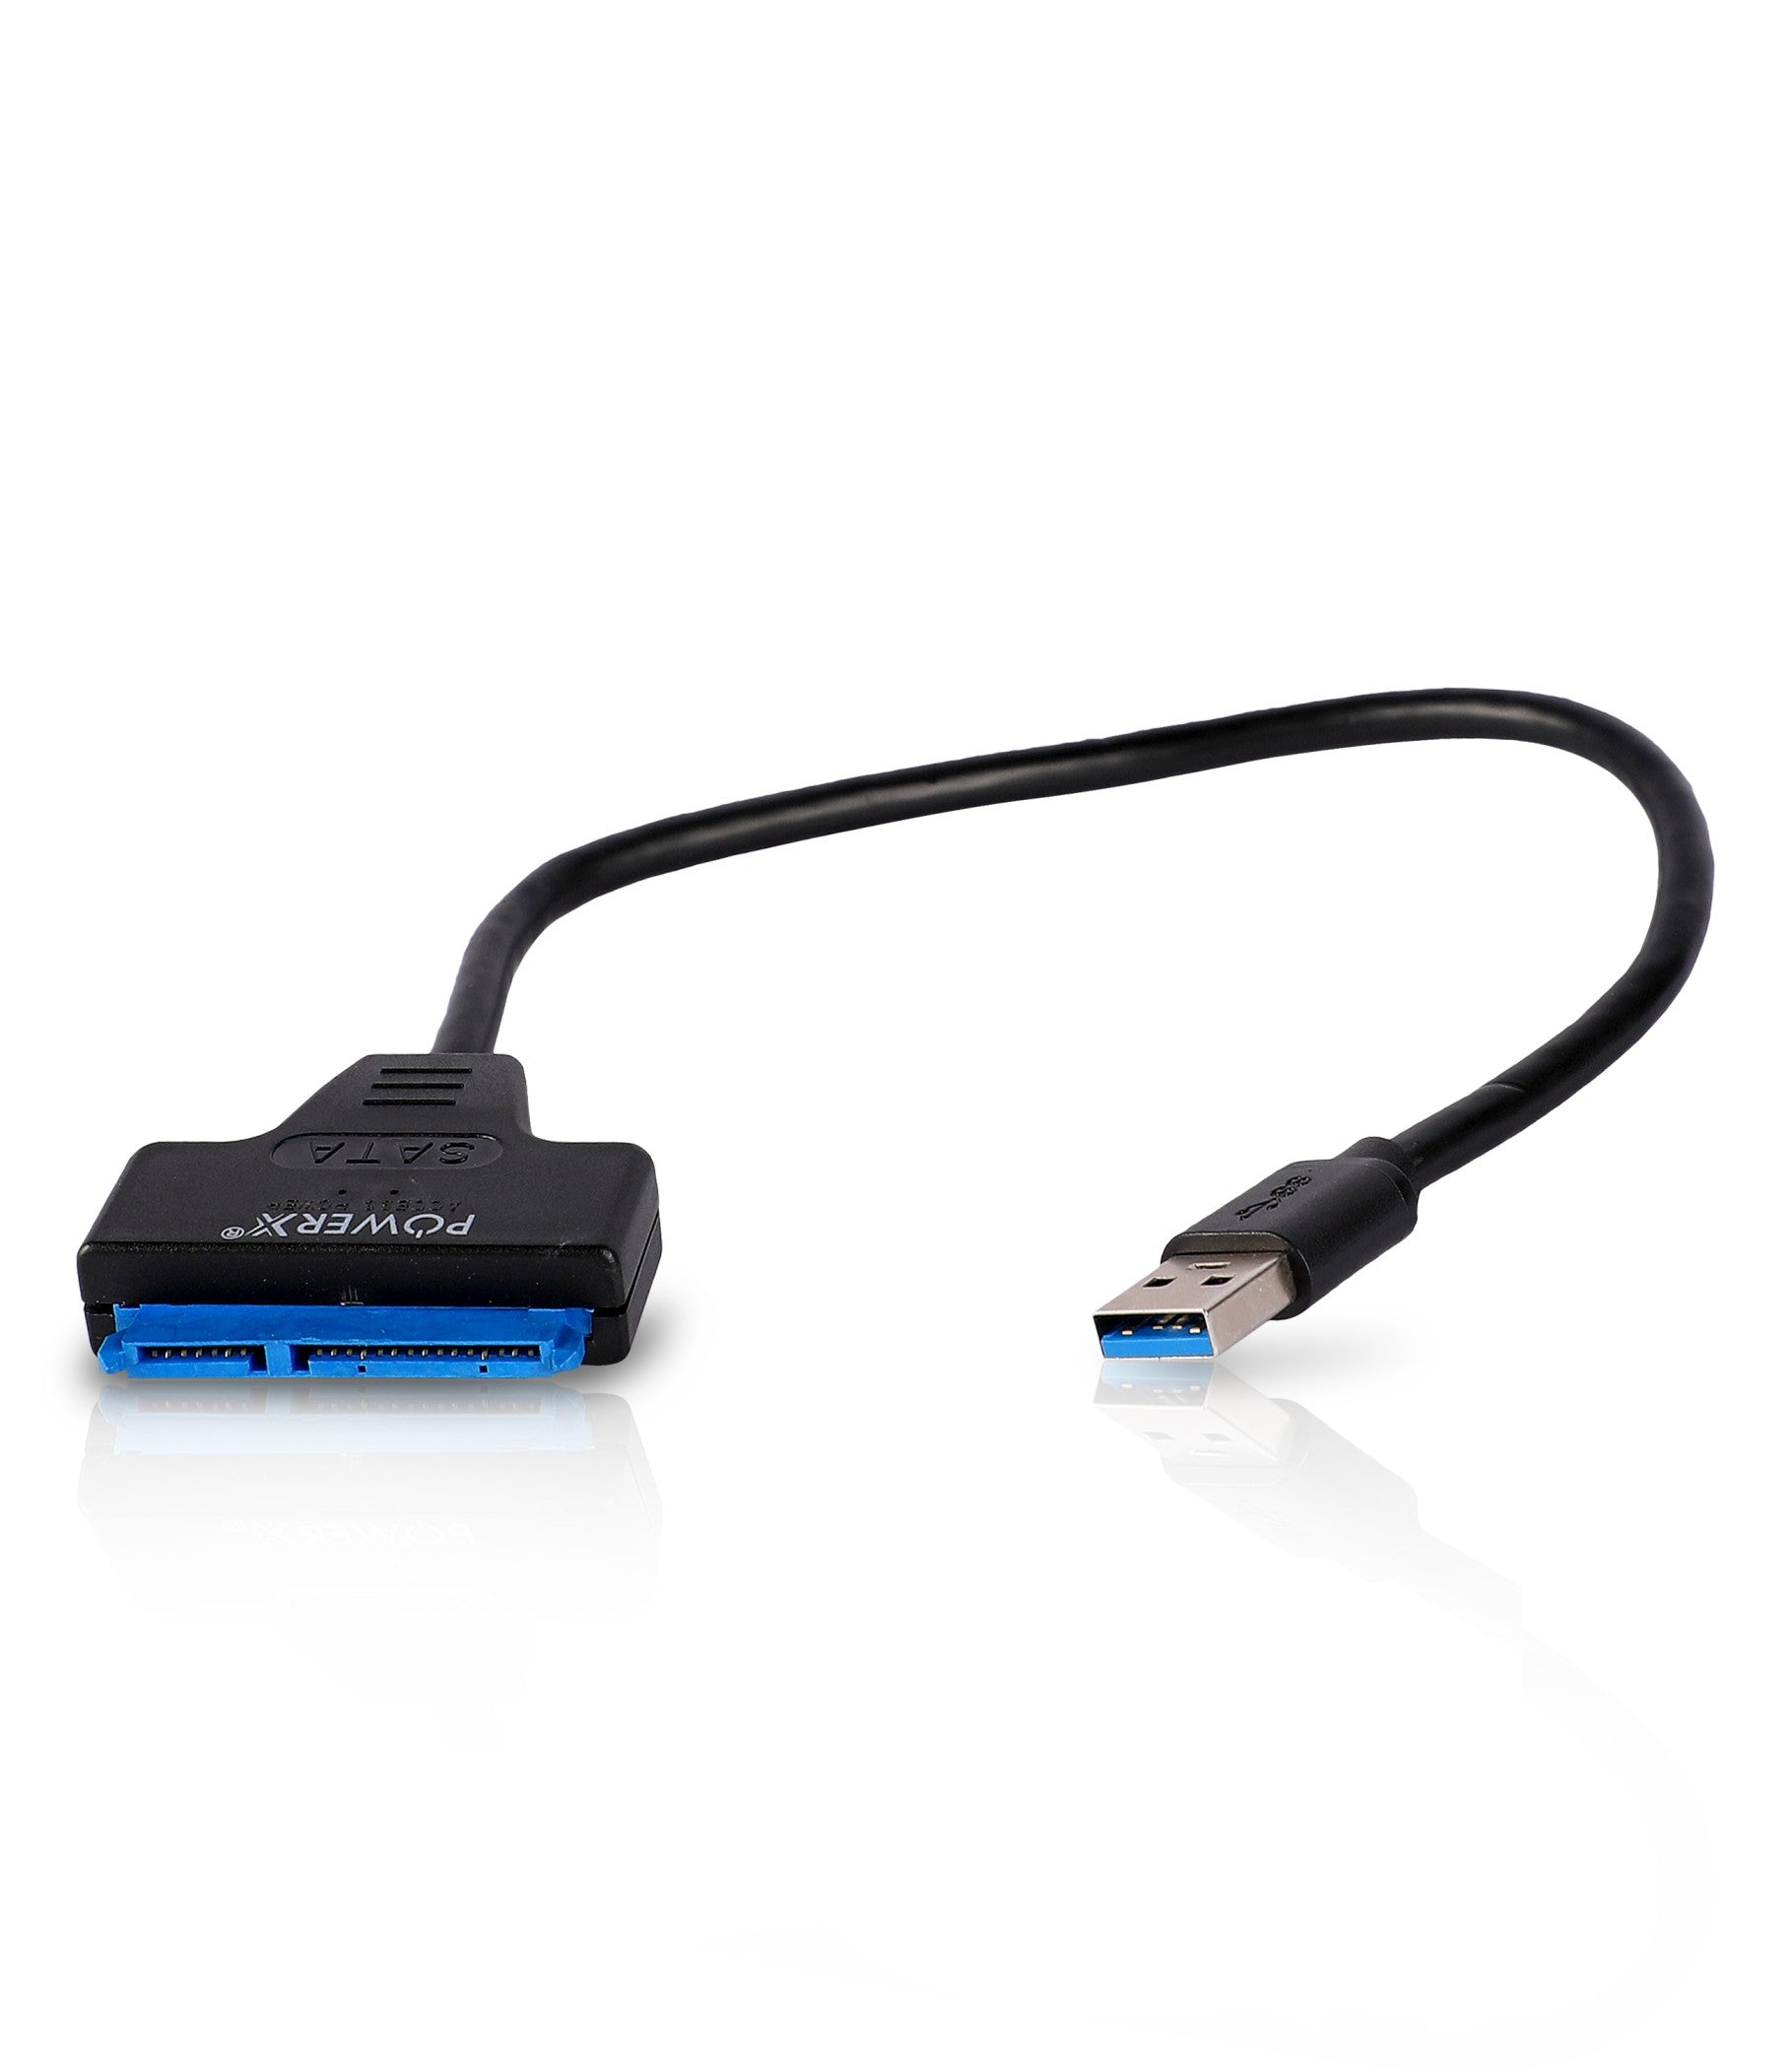 POWERX USB 3.0 TO SATA 22 PIN